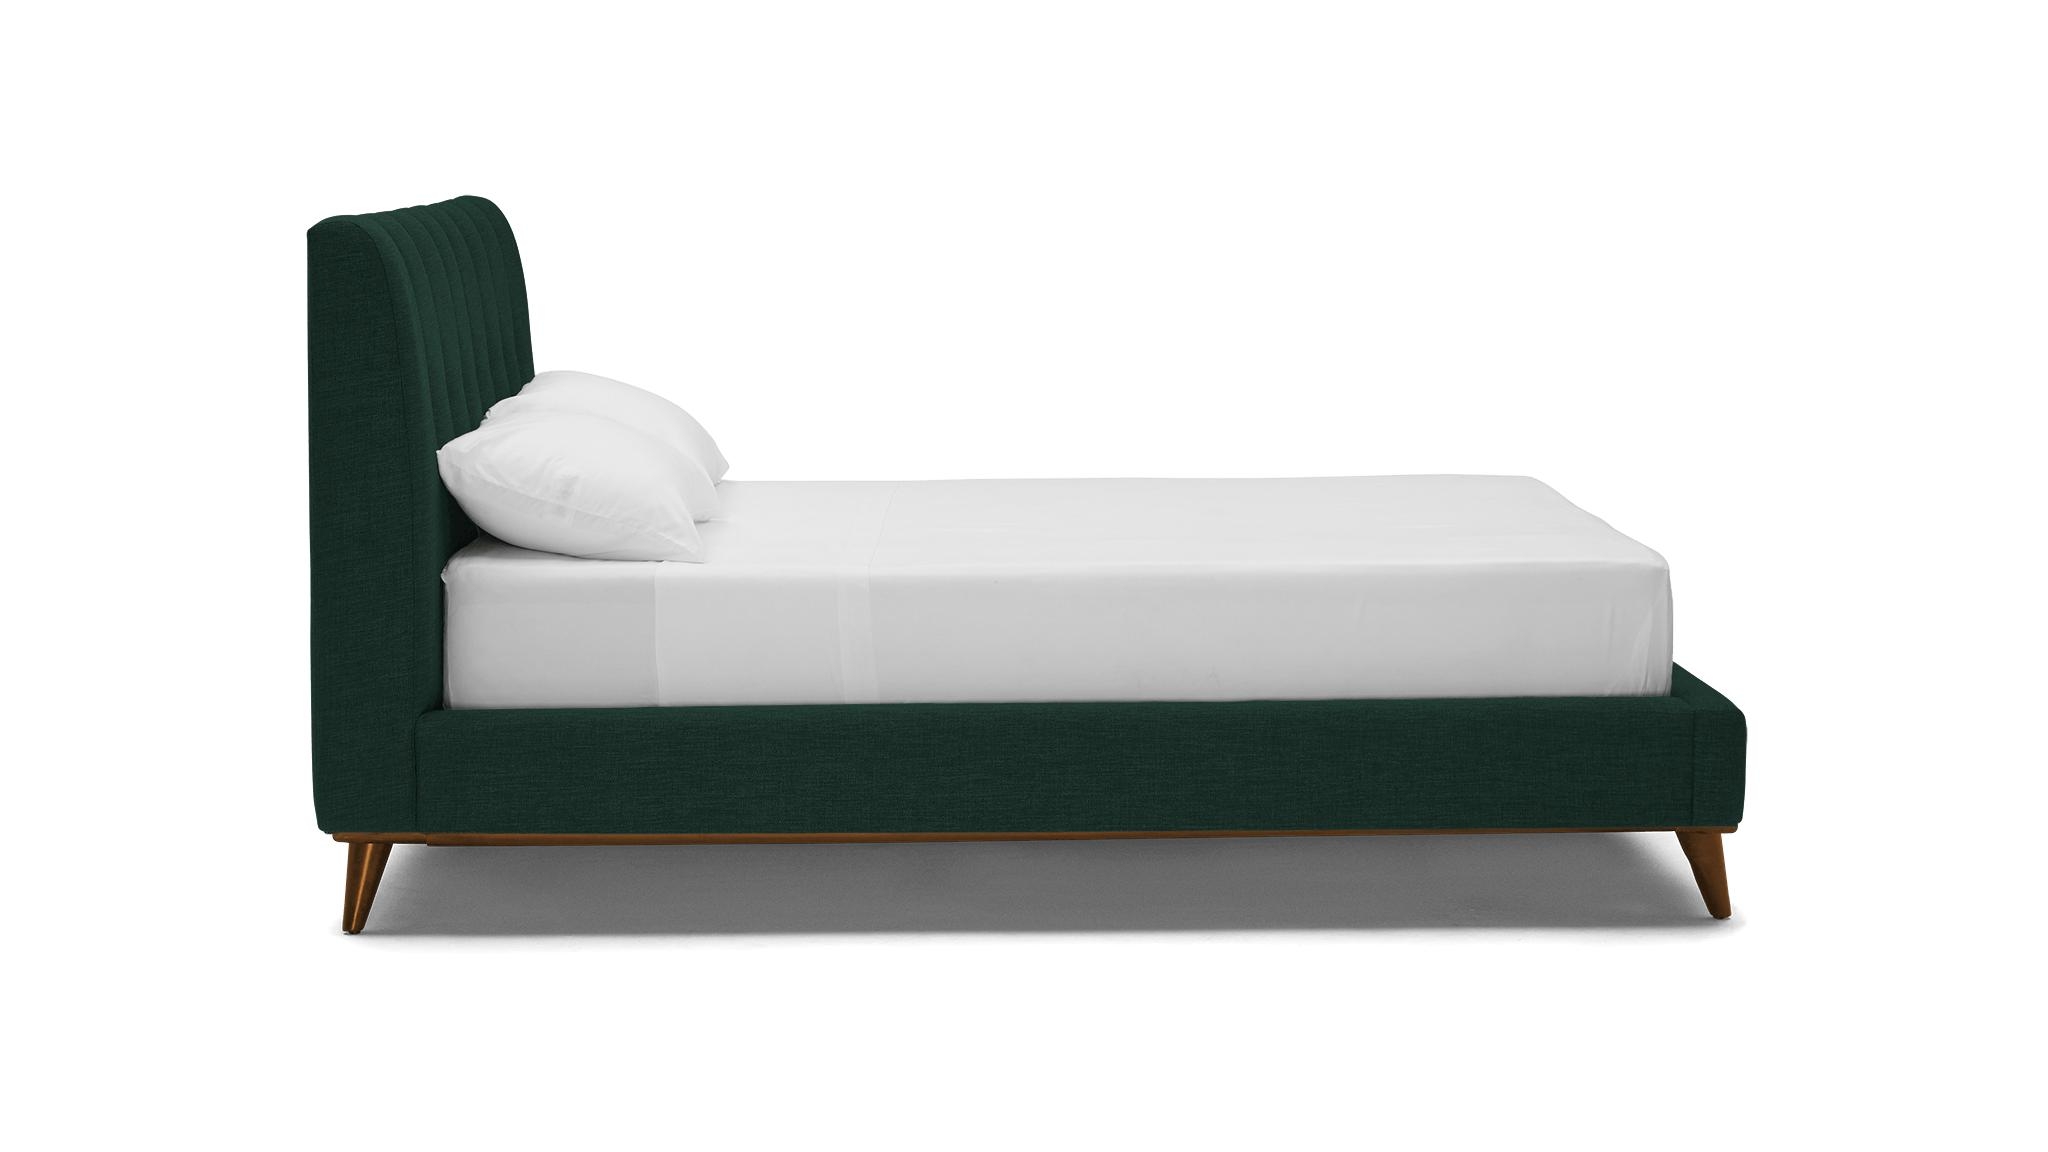 Green Hughes Mid Century Modern Bed - Royale Evergreen - Mocha - Queen - Image 2